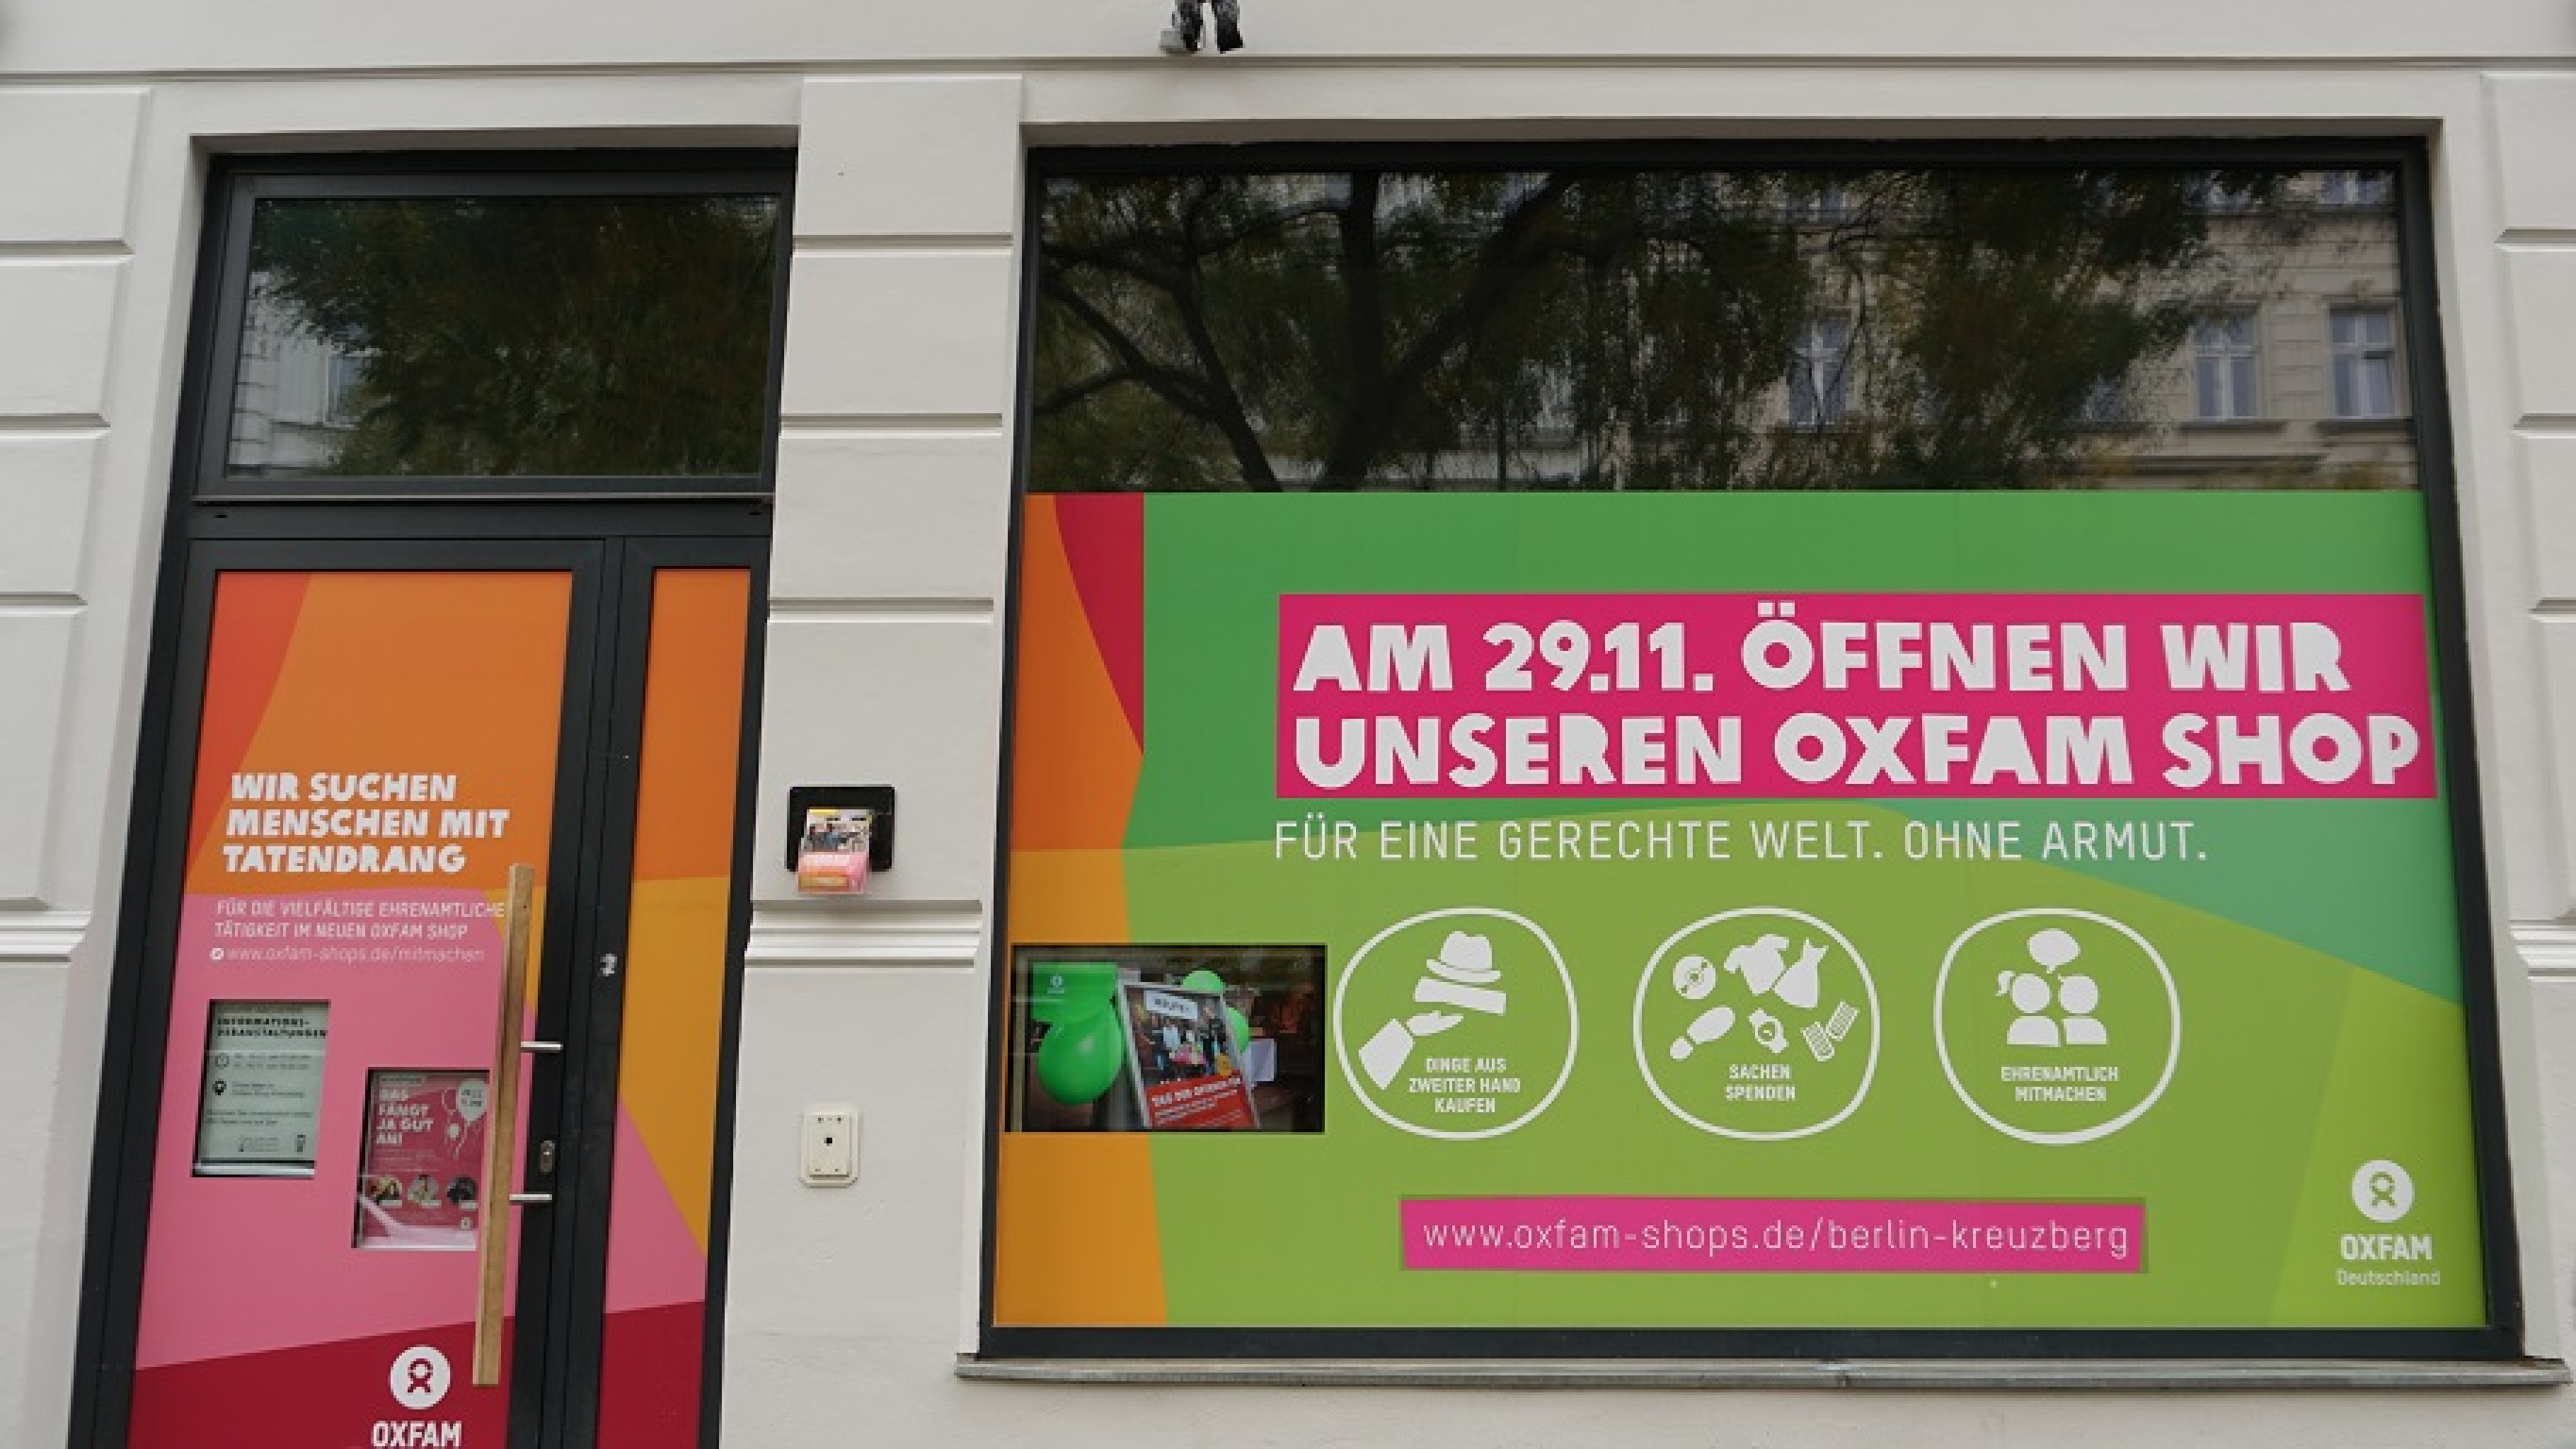 Neueröffnung des Oxfam Shop Berlin-Kreuzberg am 29. November 2018